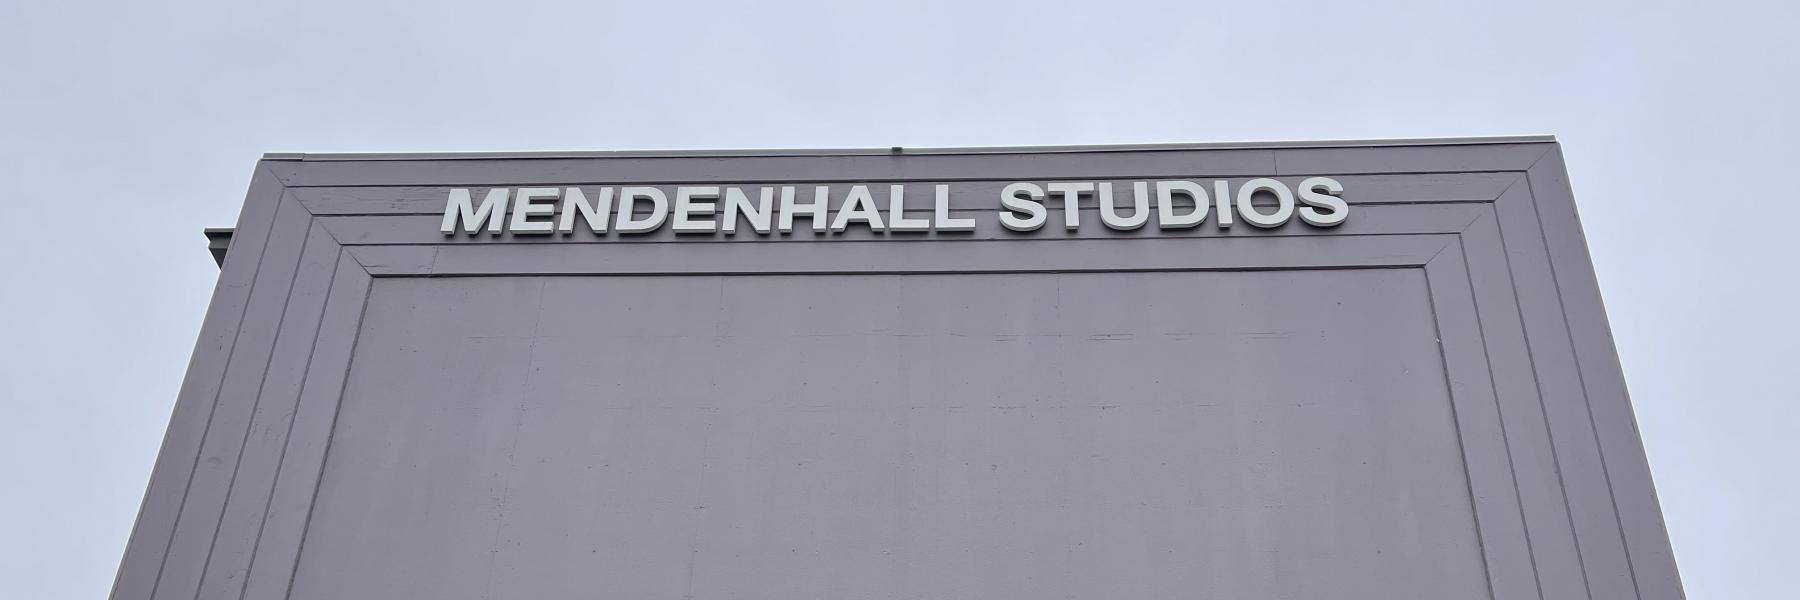 mendenhall studios